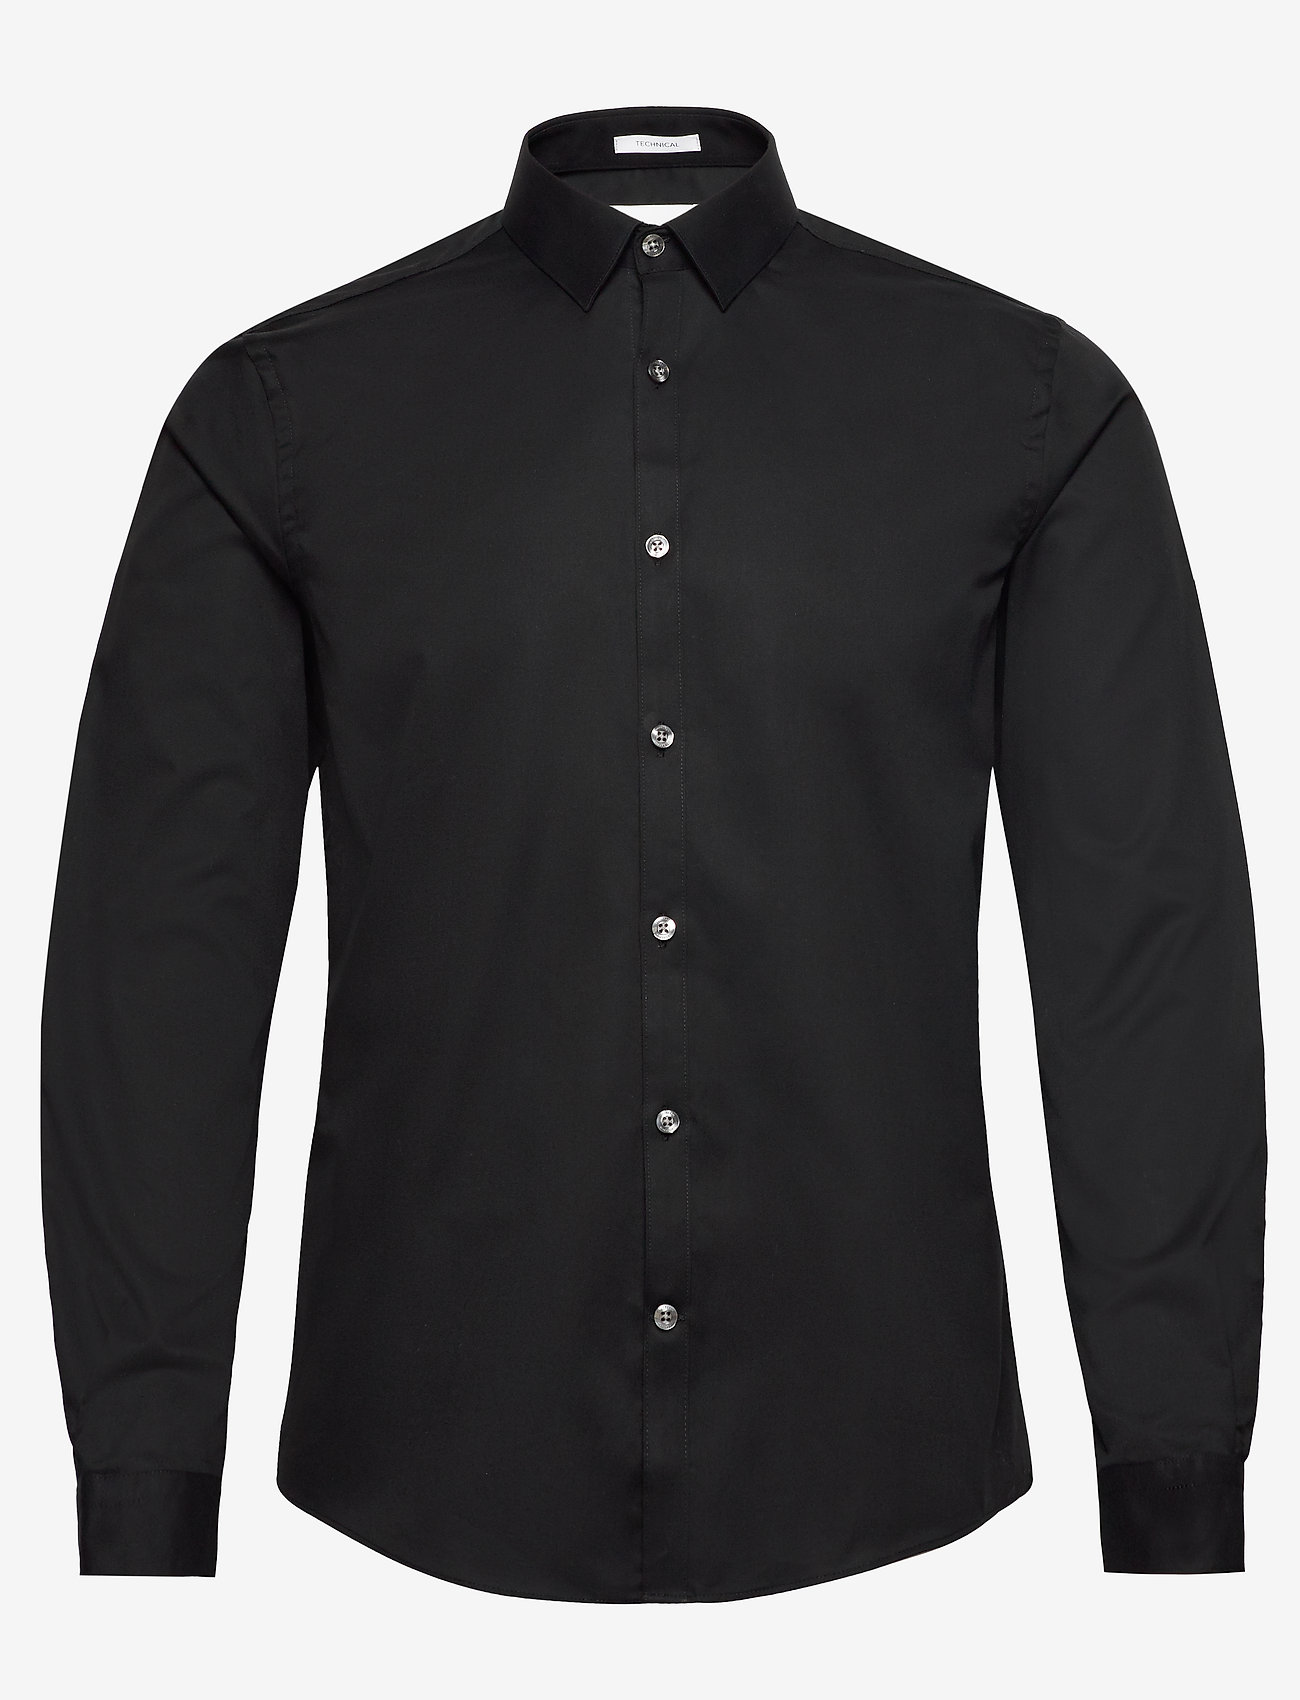 Lindbergh - Plain twill stretch shirt L/S - basic skjortor - black - 0